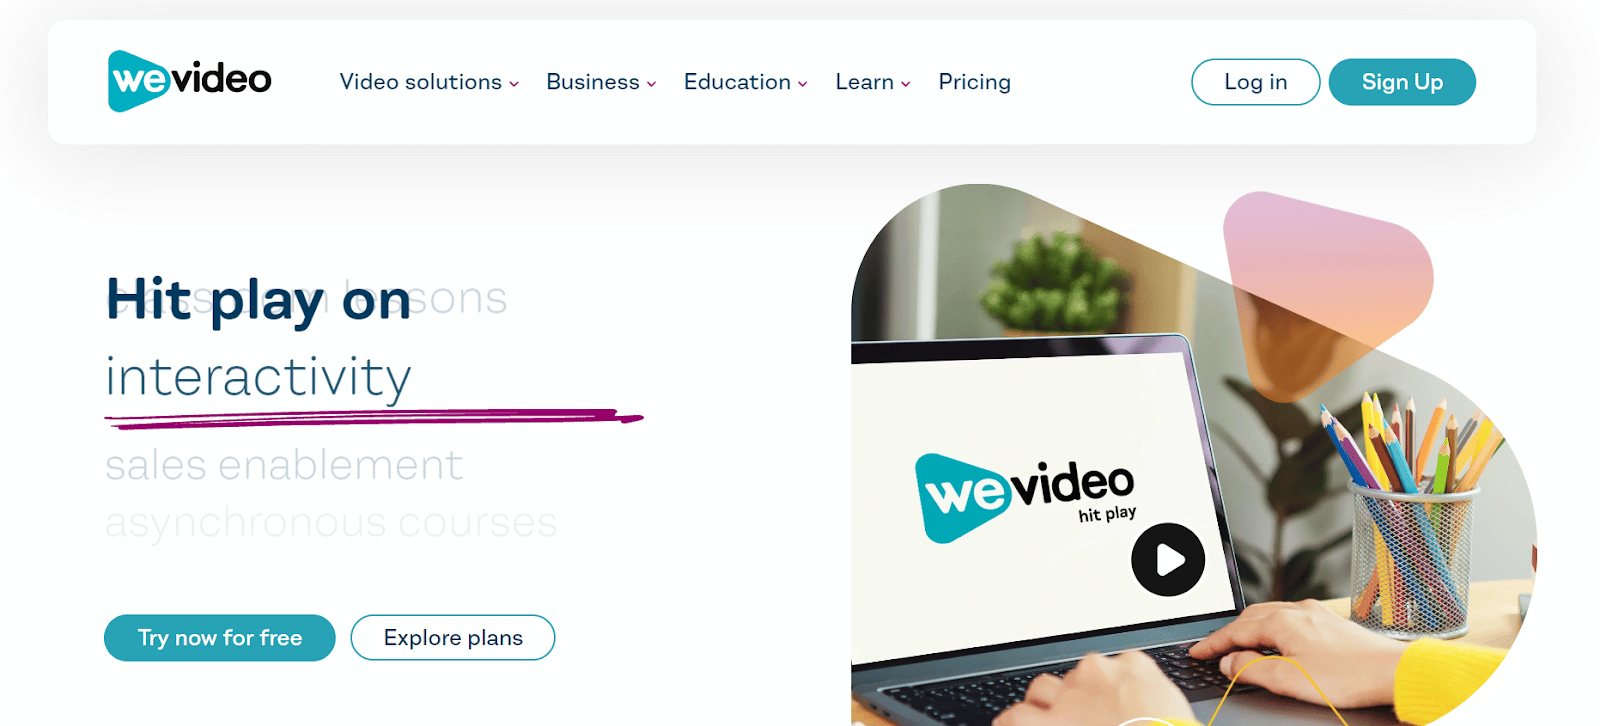 WeVideo Video Generator: Is It Worth The Money